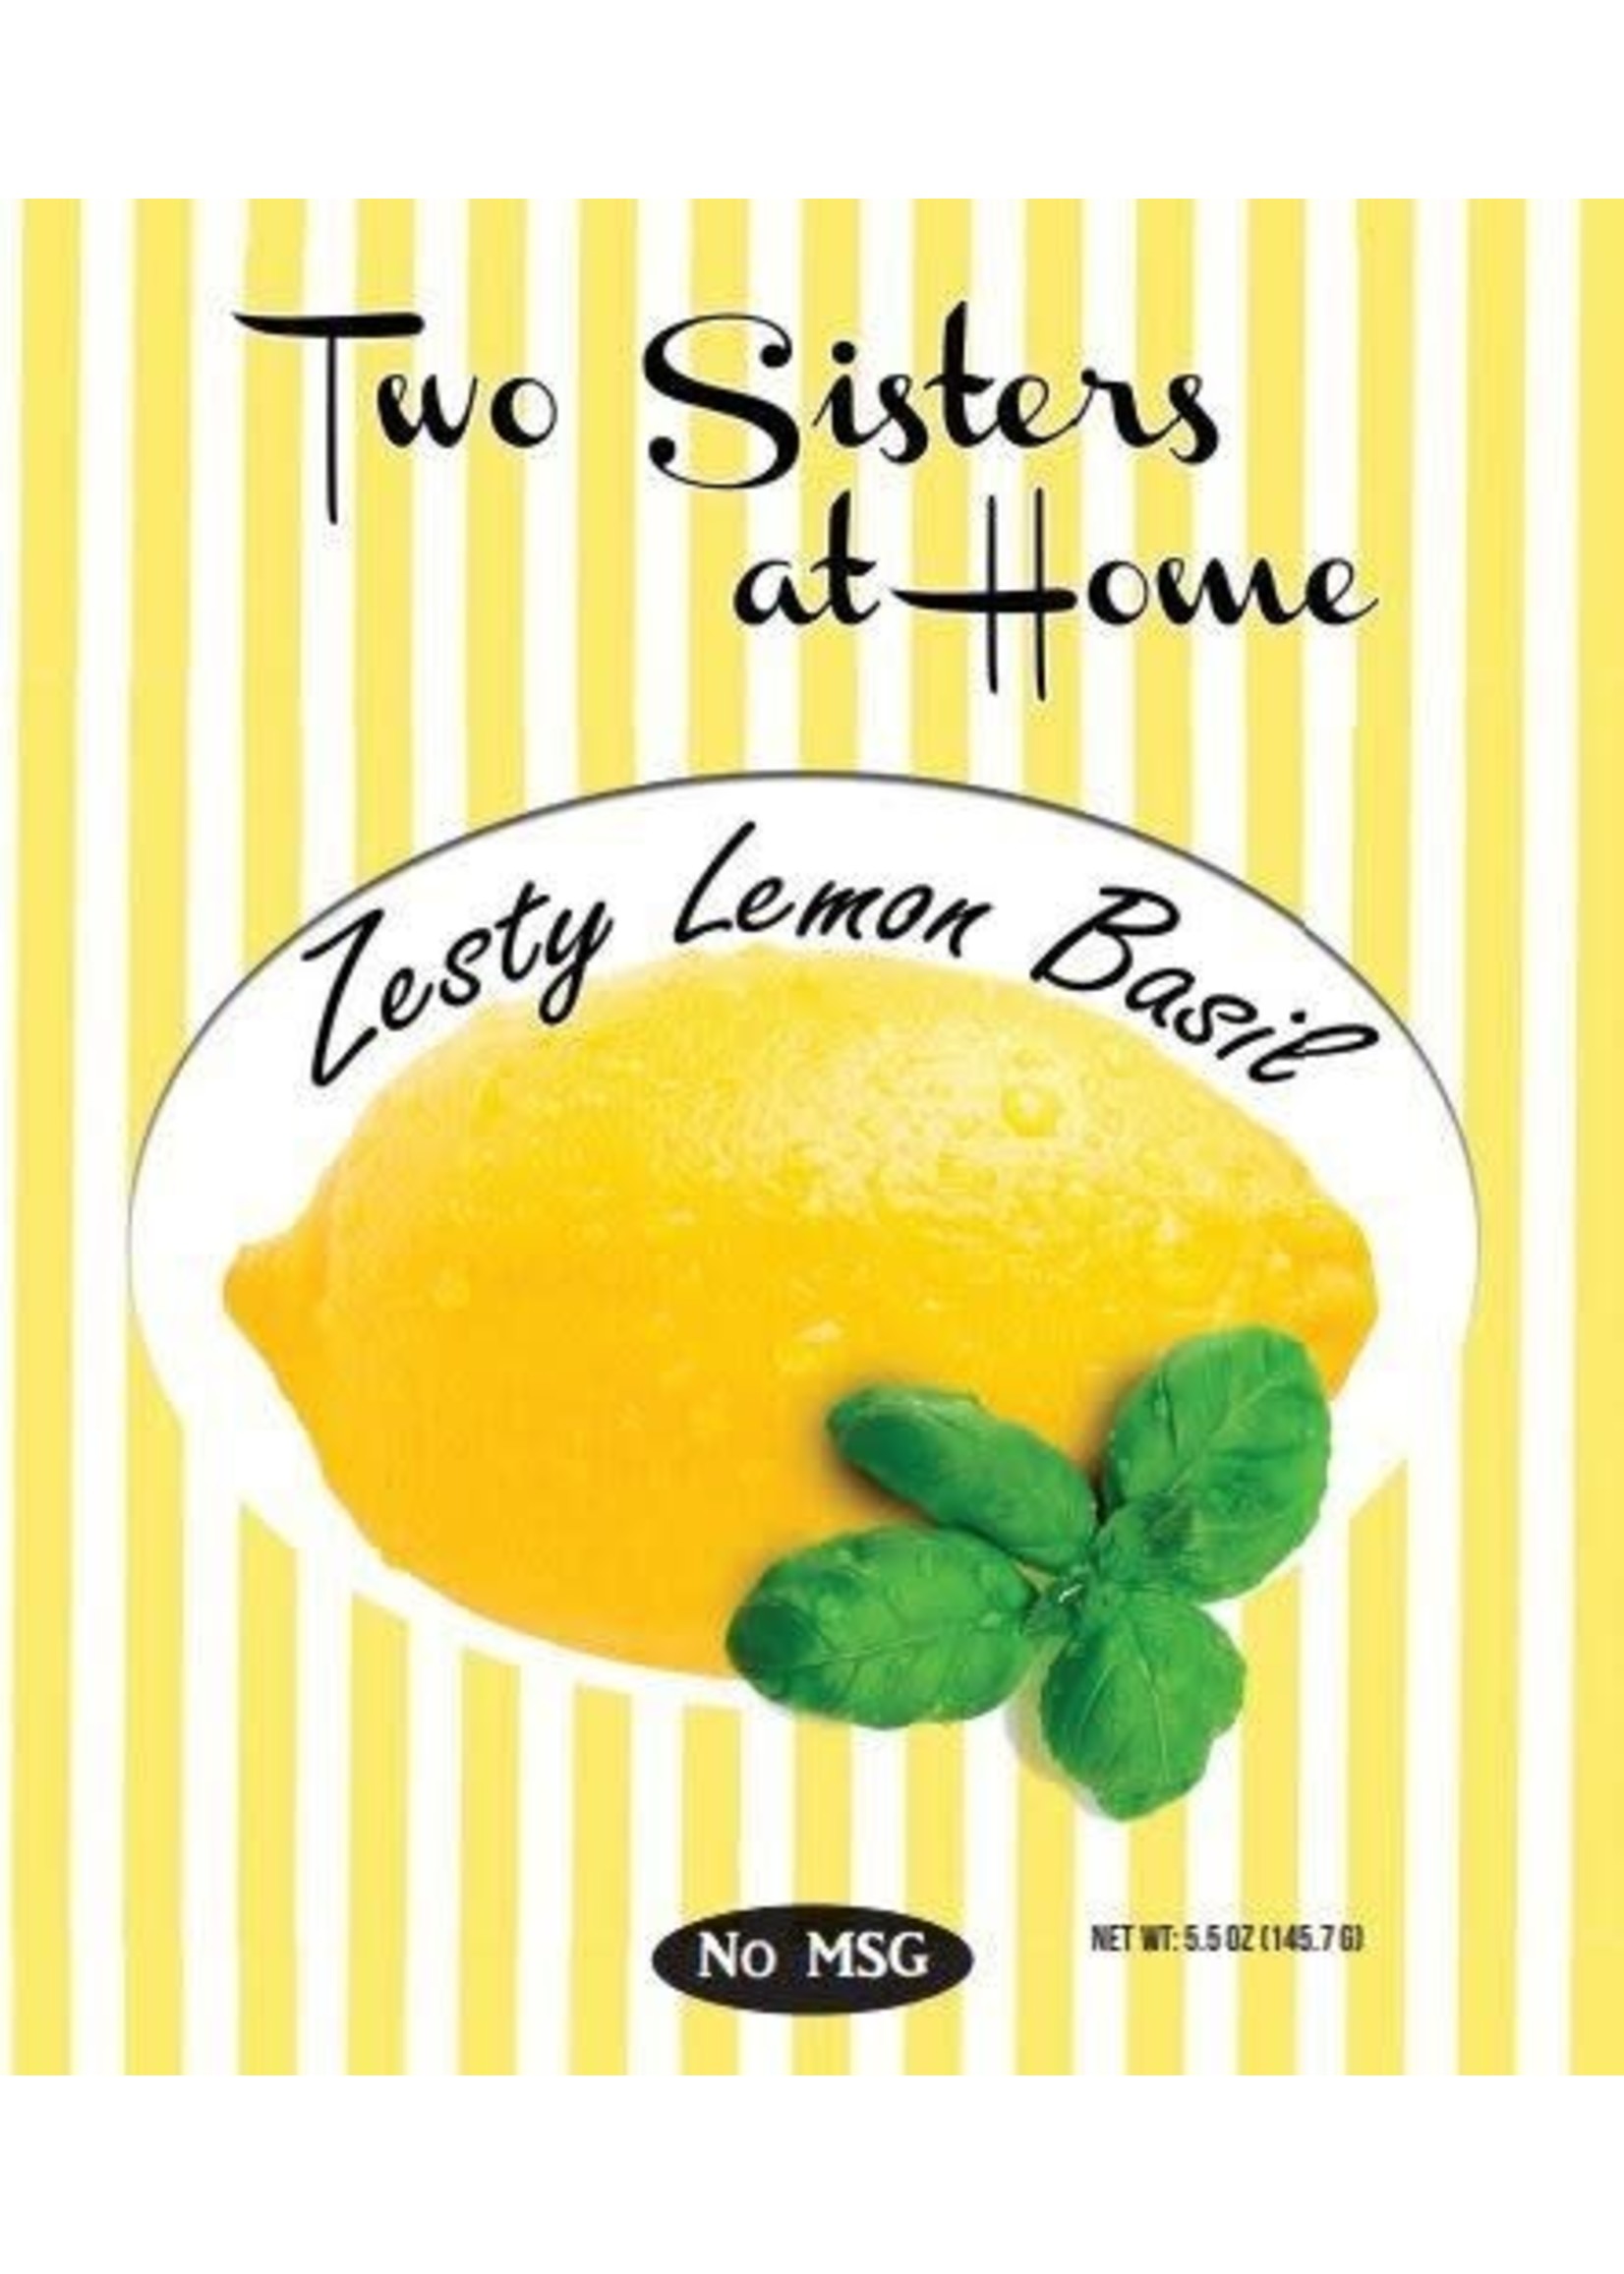 Two Sisters at Home Zesty Lemon Basil Dip Mix